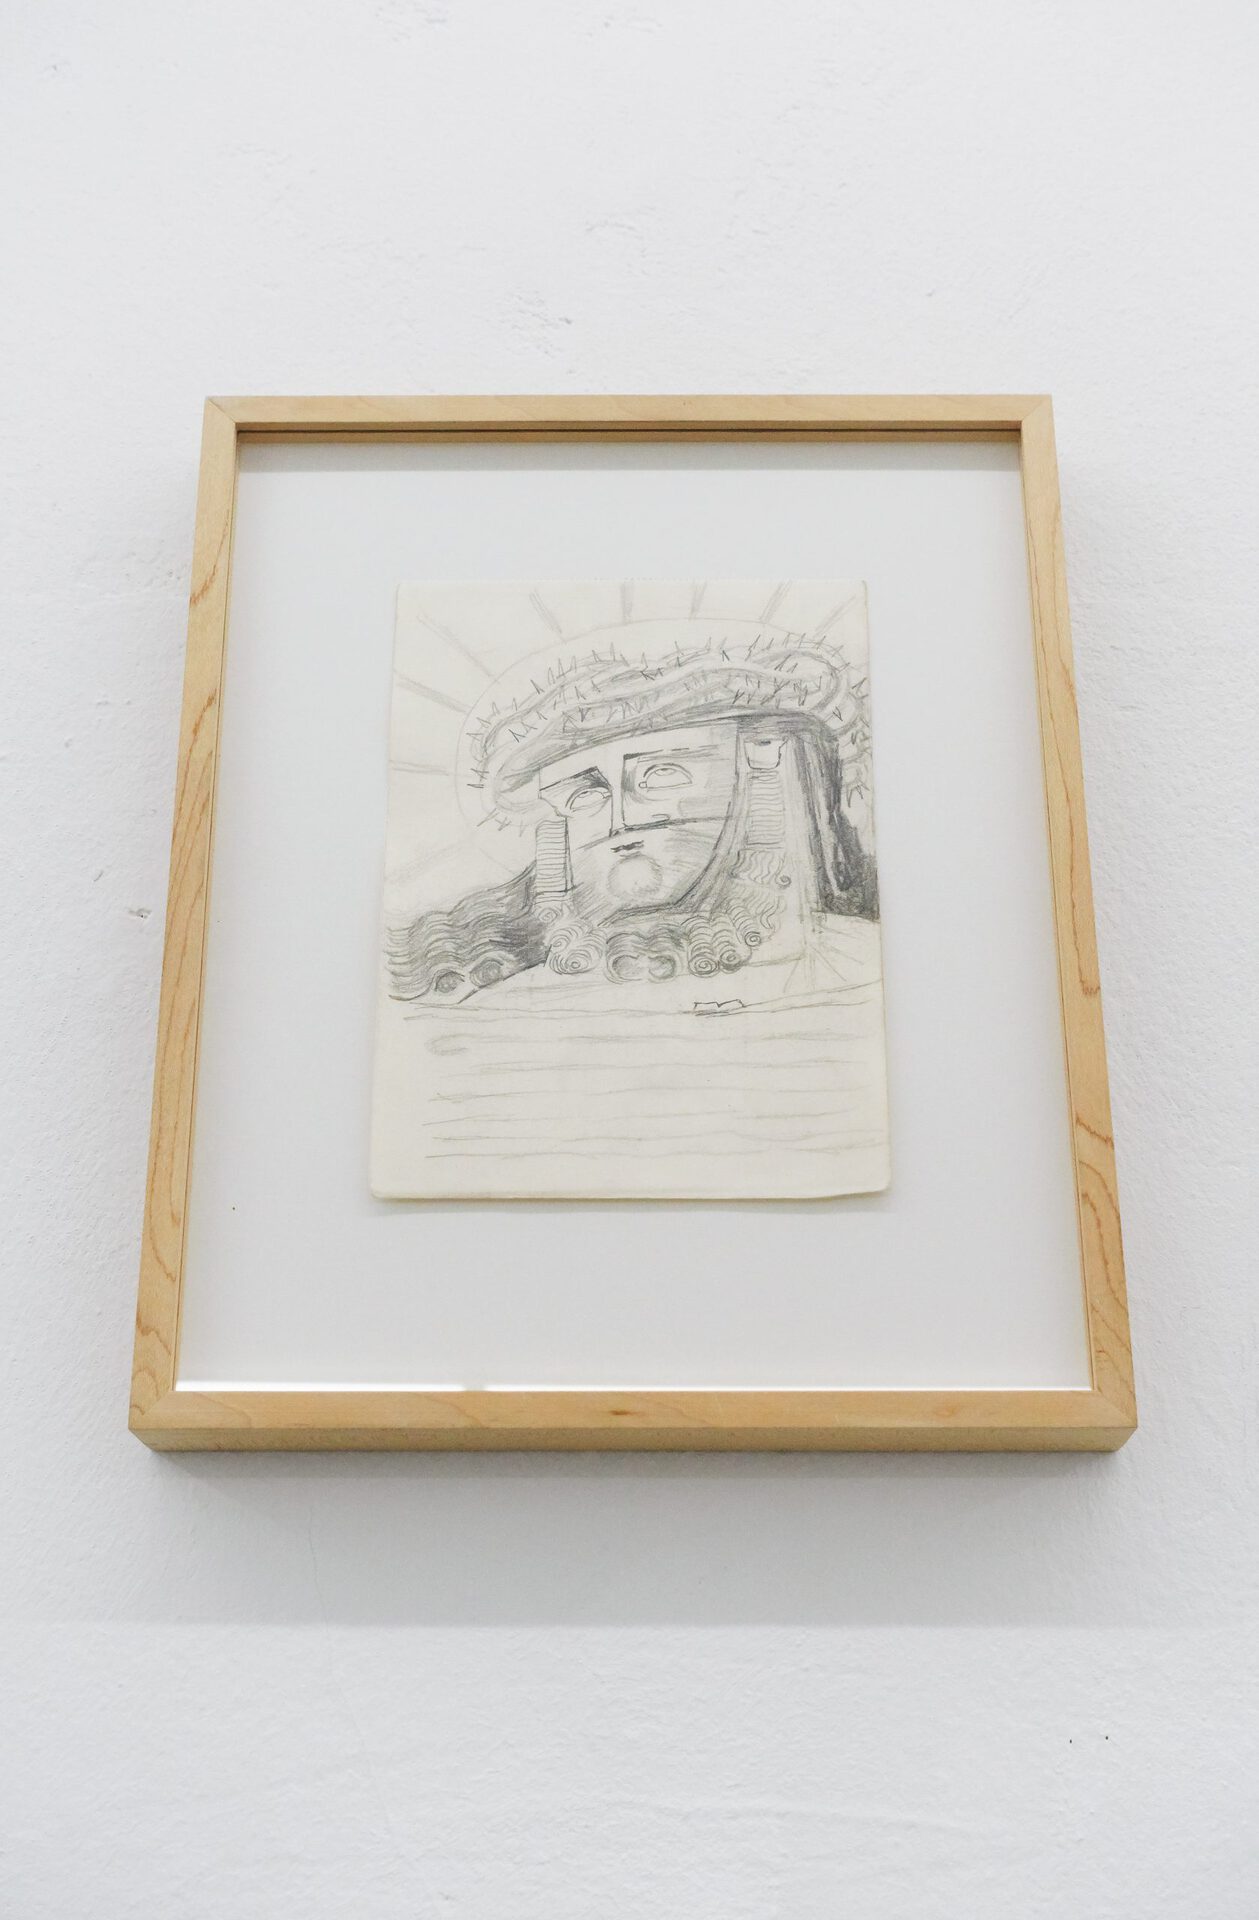 Aurel Iselstöger, Untitled, Undated, (archive # 262), Pencil on paper, 20 x 14.5 cm